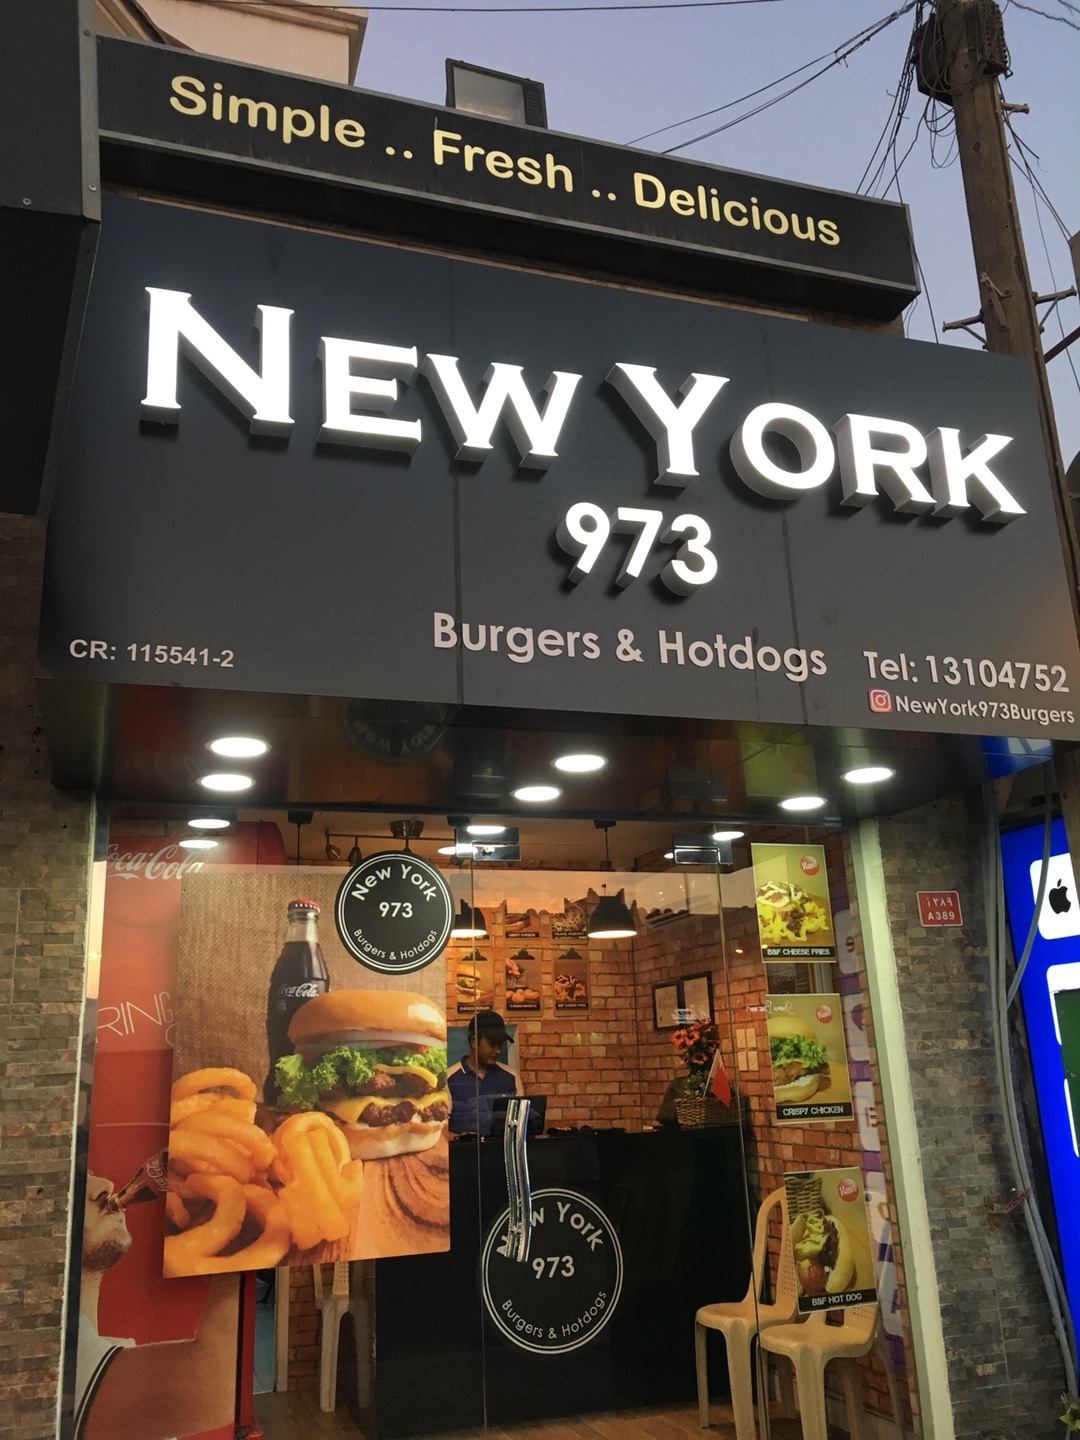 New York 973 Burgers & Hotdogs - Bahrain